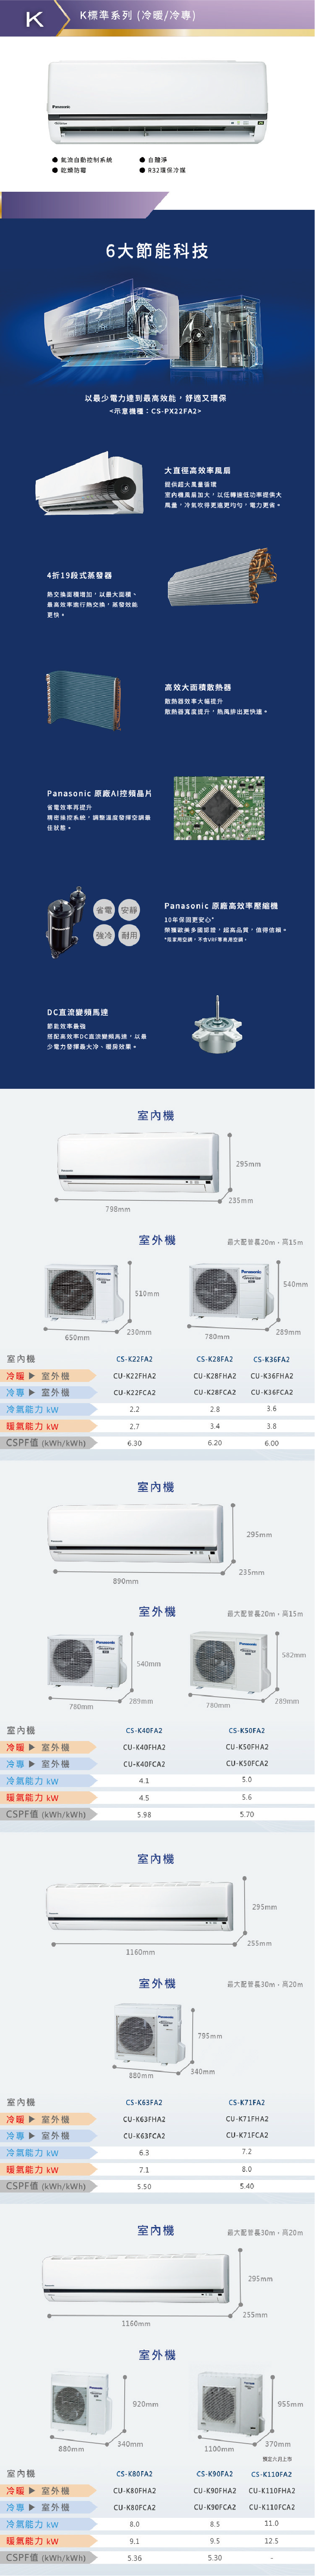 CU-K90FCA2 16坪適用 K系列 一對一 分離式 變頻 冷專 冷氣 CS-K90FA2